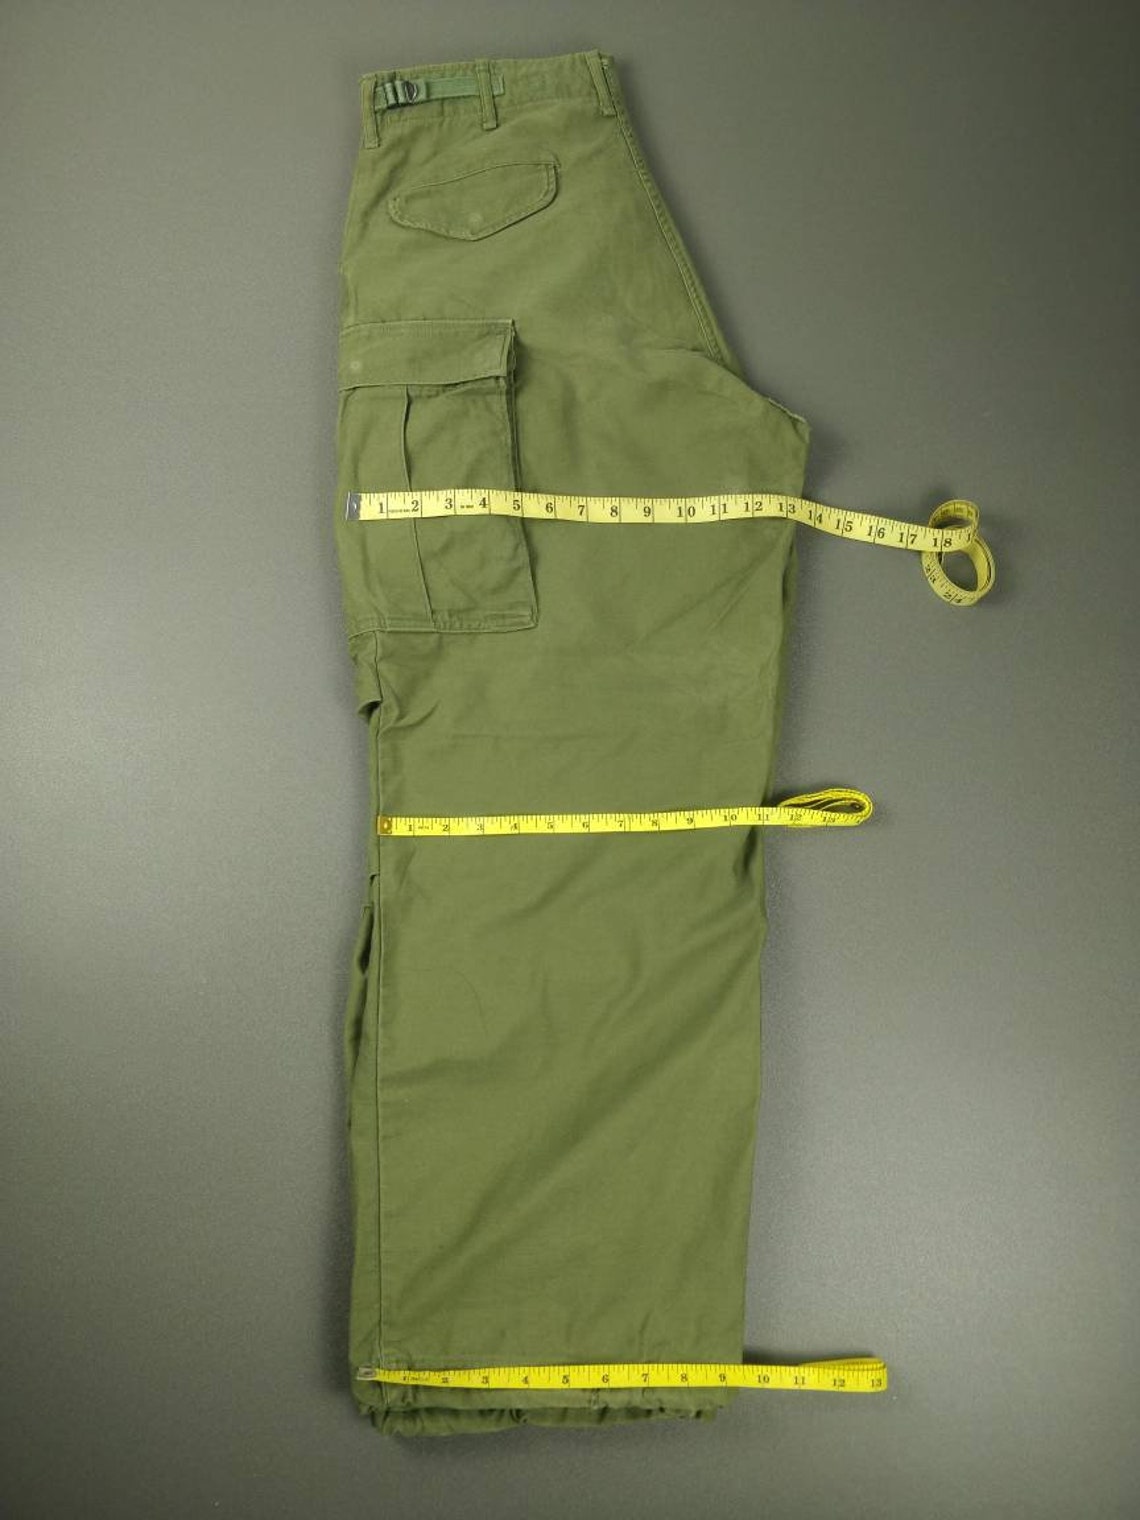 US Army Vietnam War M-1965 Field Trouser Pants | Etsy